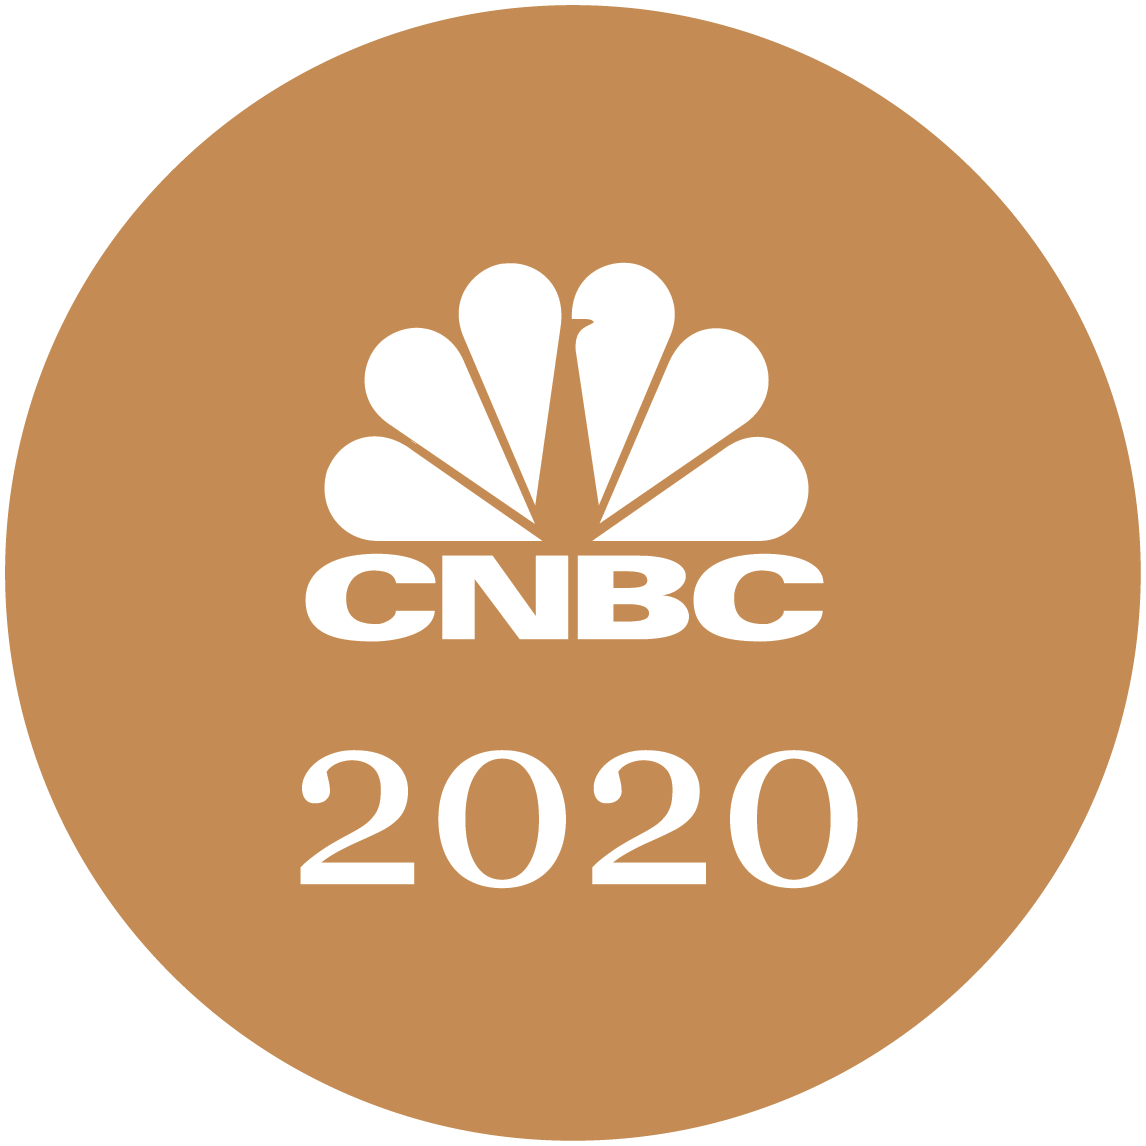 Sheaff Brock investment advisor, CNBC FA100, top rated financial advisor 2020